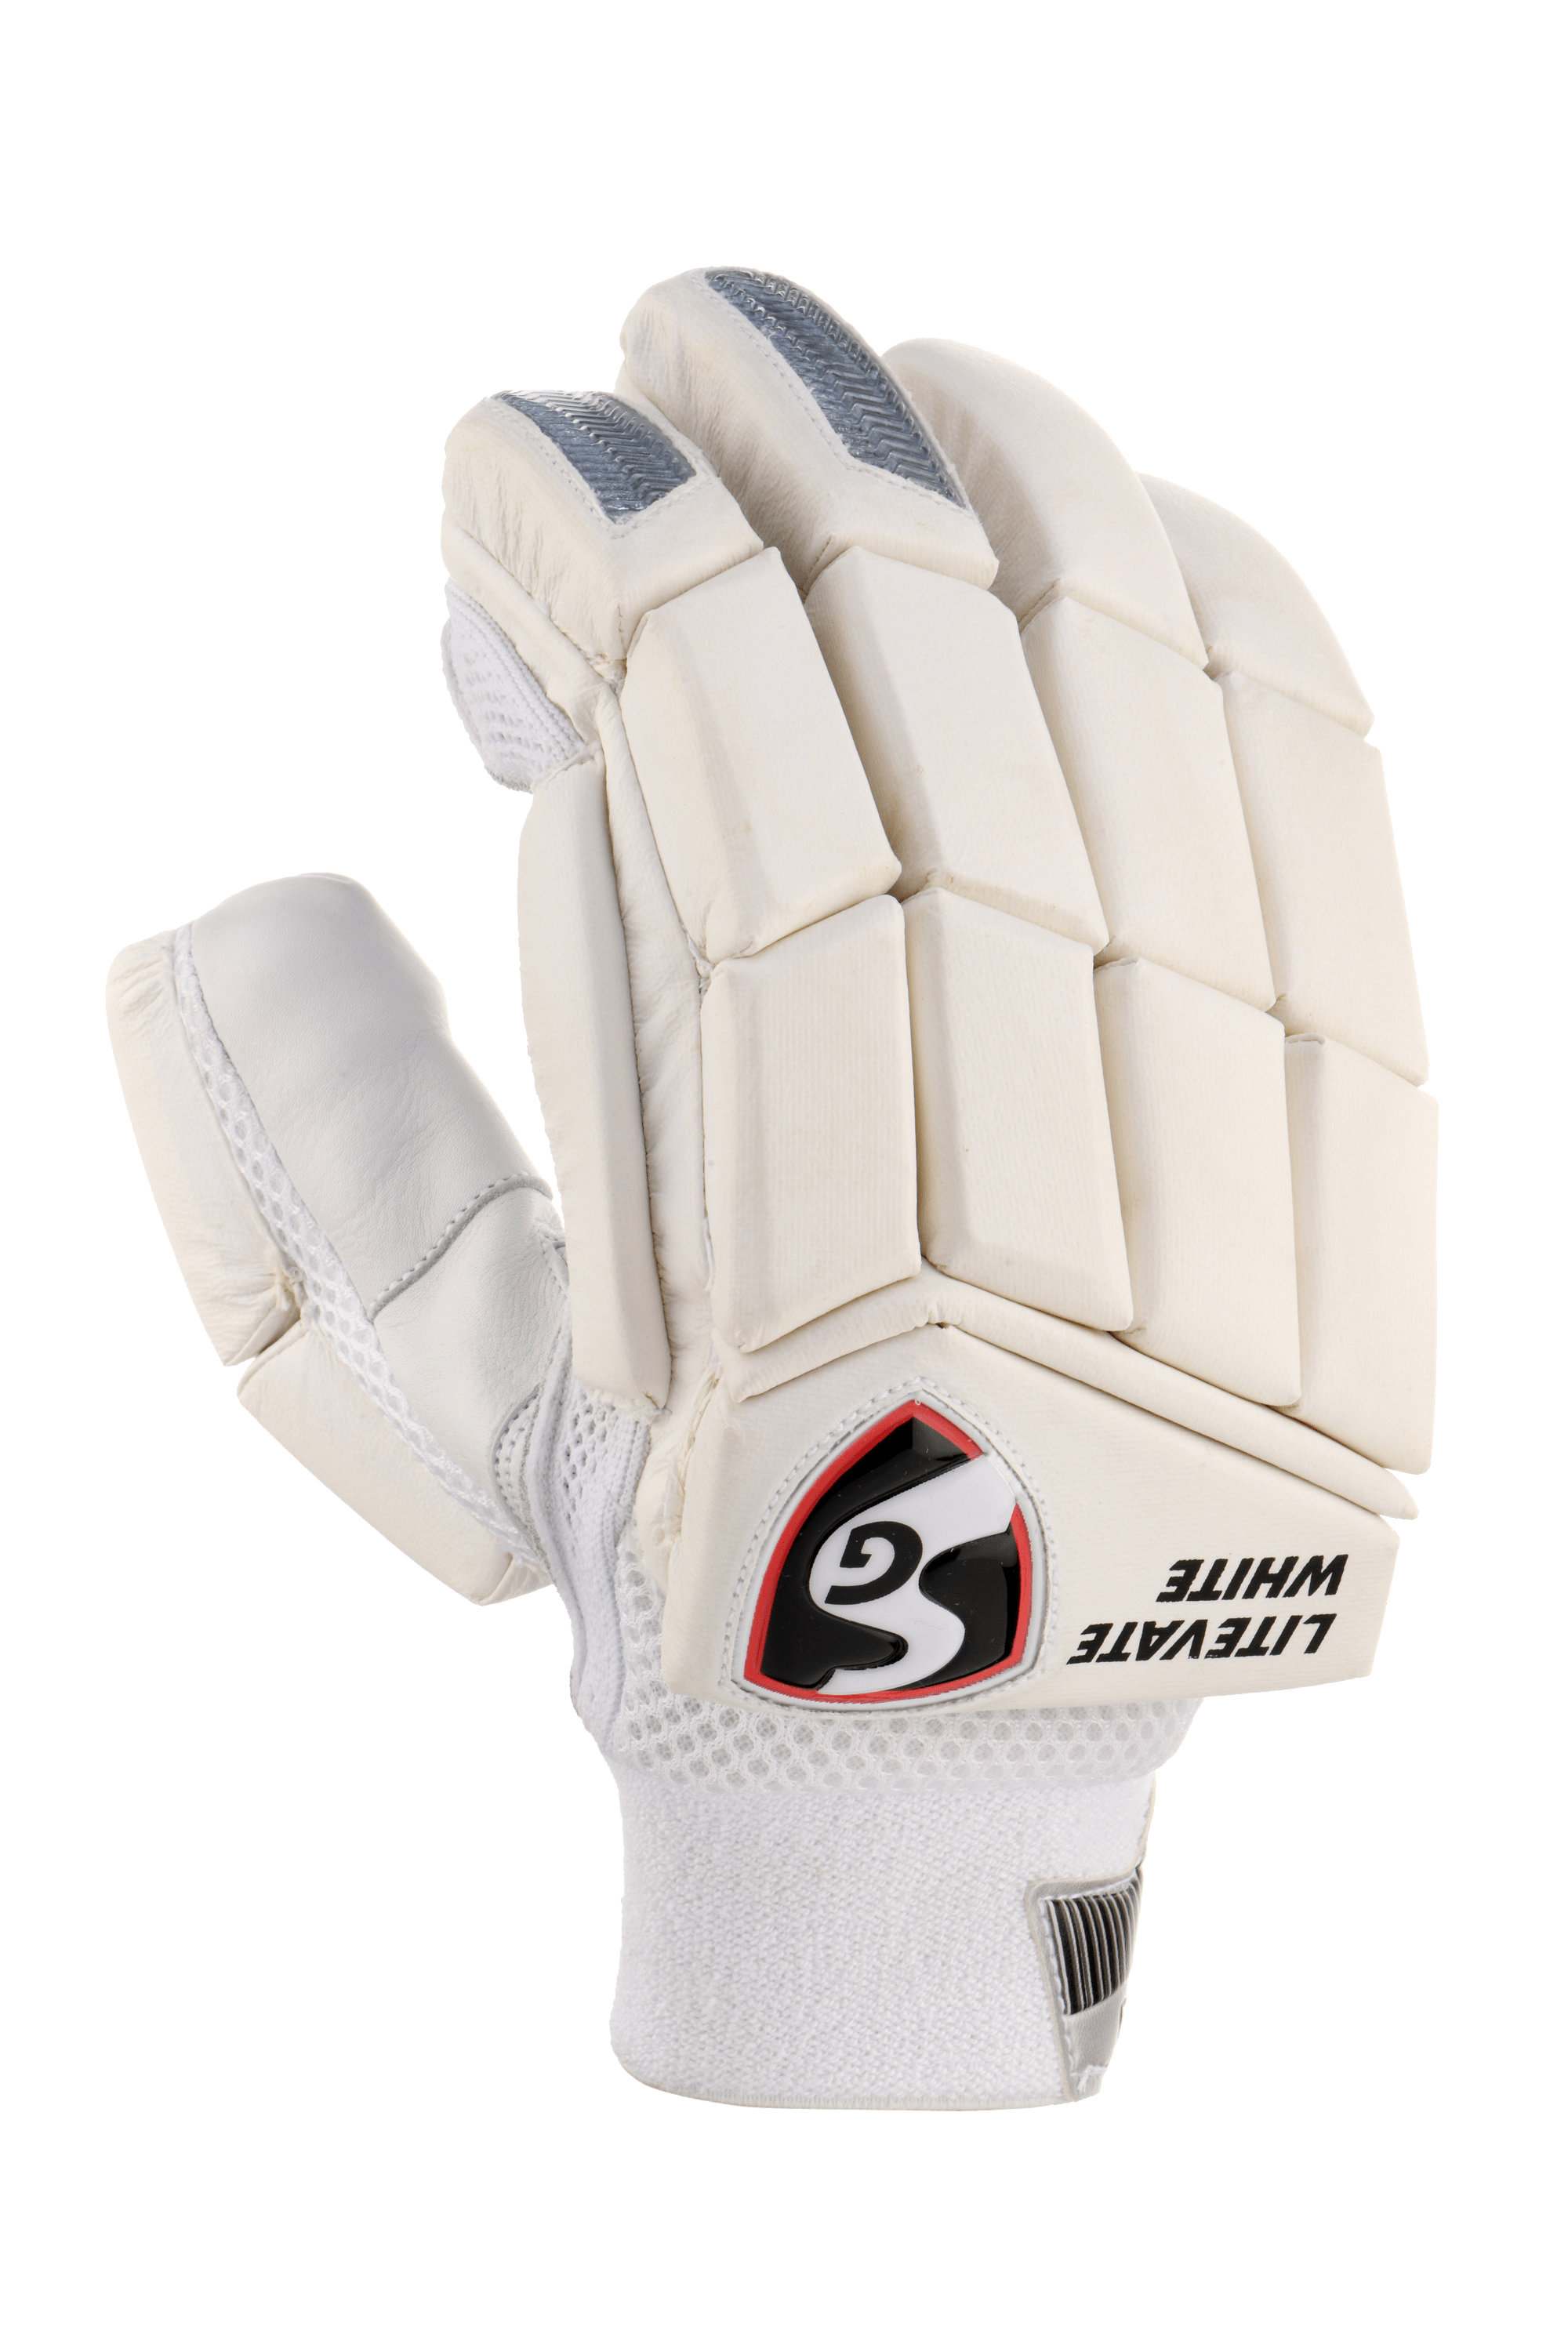 SG Gloves Adult RH SG Litevate White Adults Cricket Batting Gloves